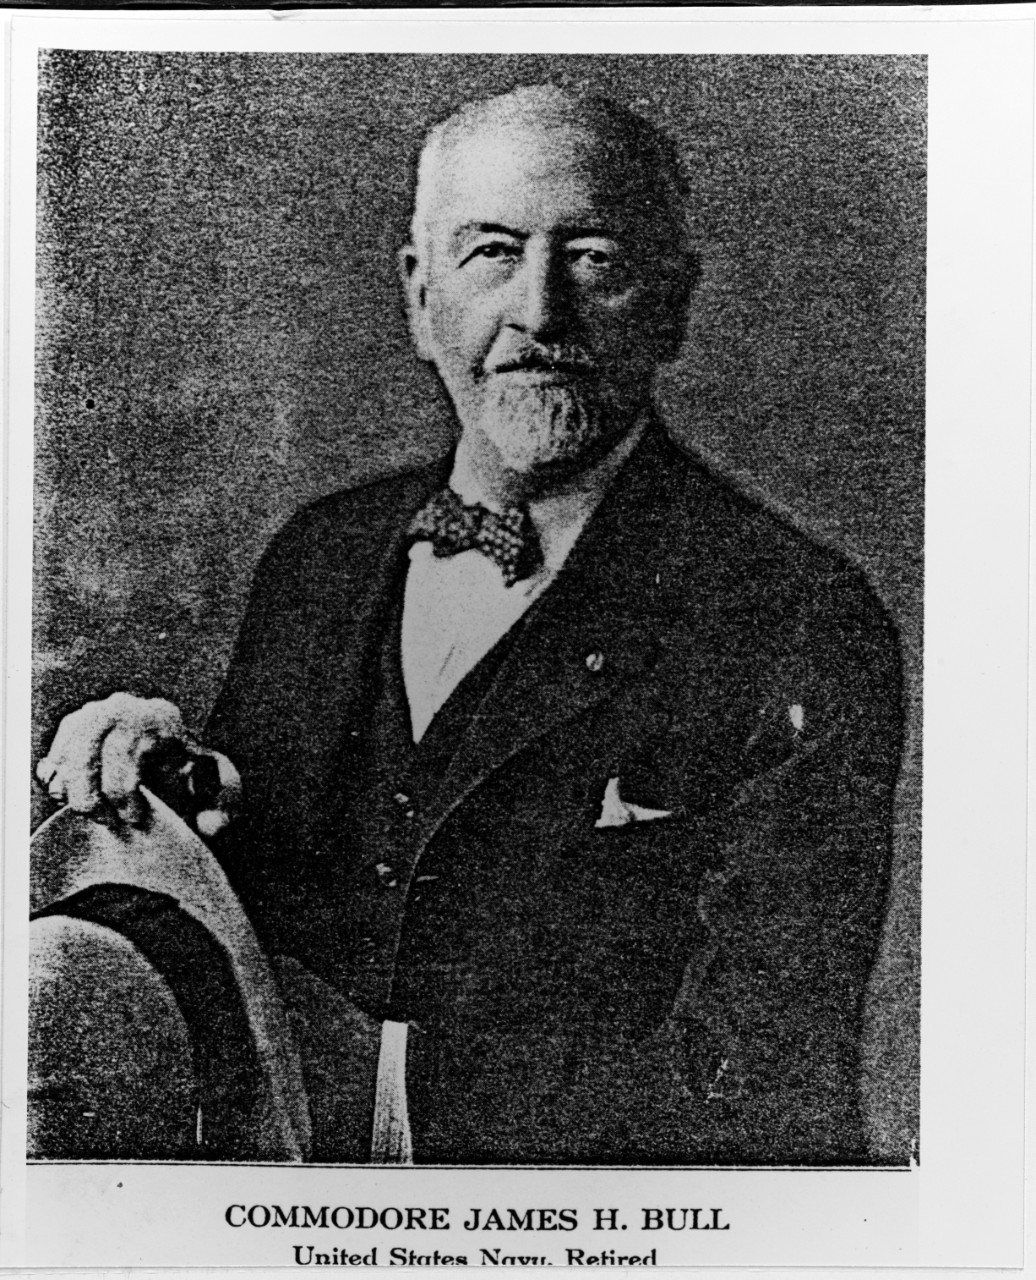 Commodore James H. Bull, USN(Ret)